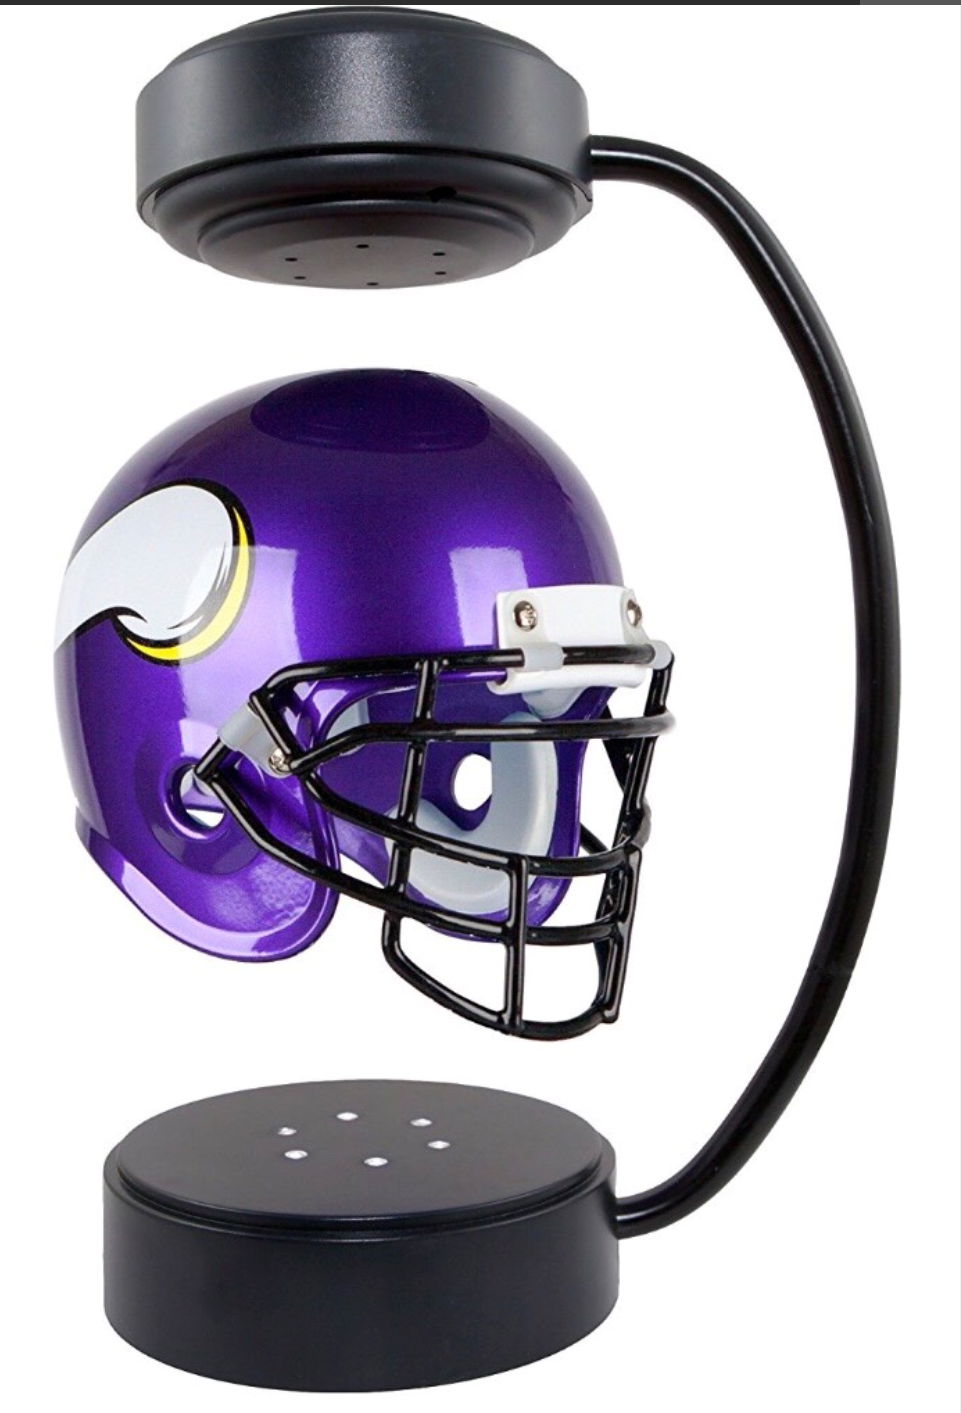 new spinning customize design magnetic levitation floating NFL helmet display 5